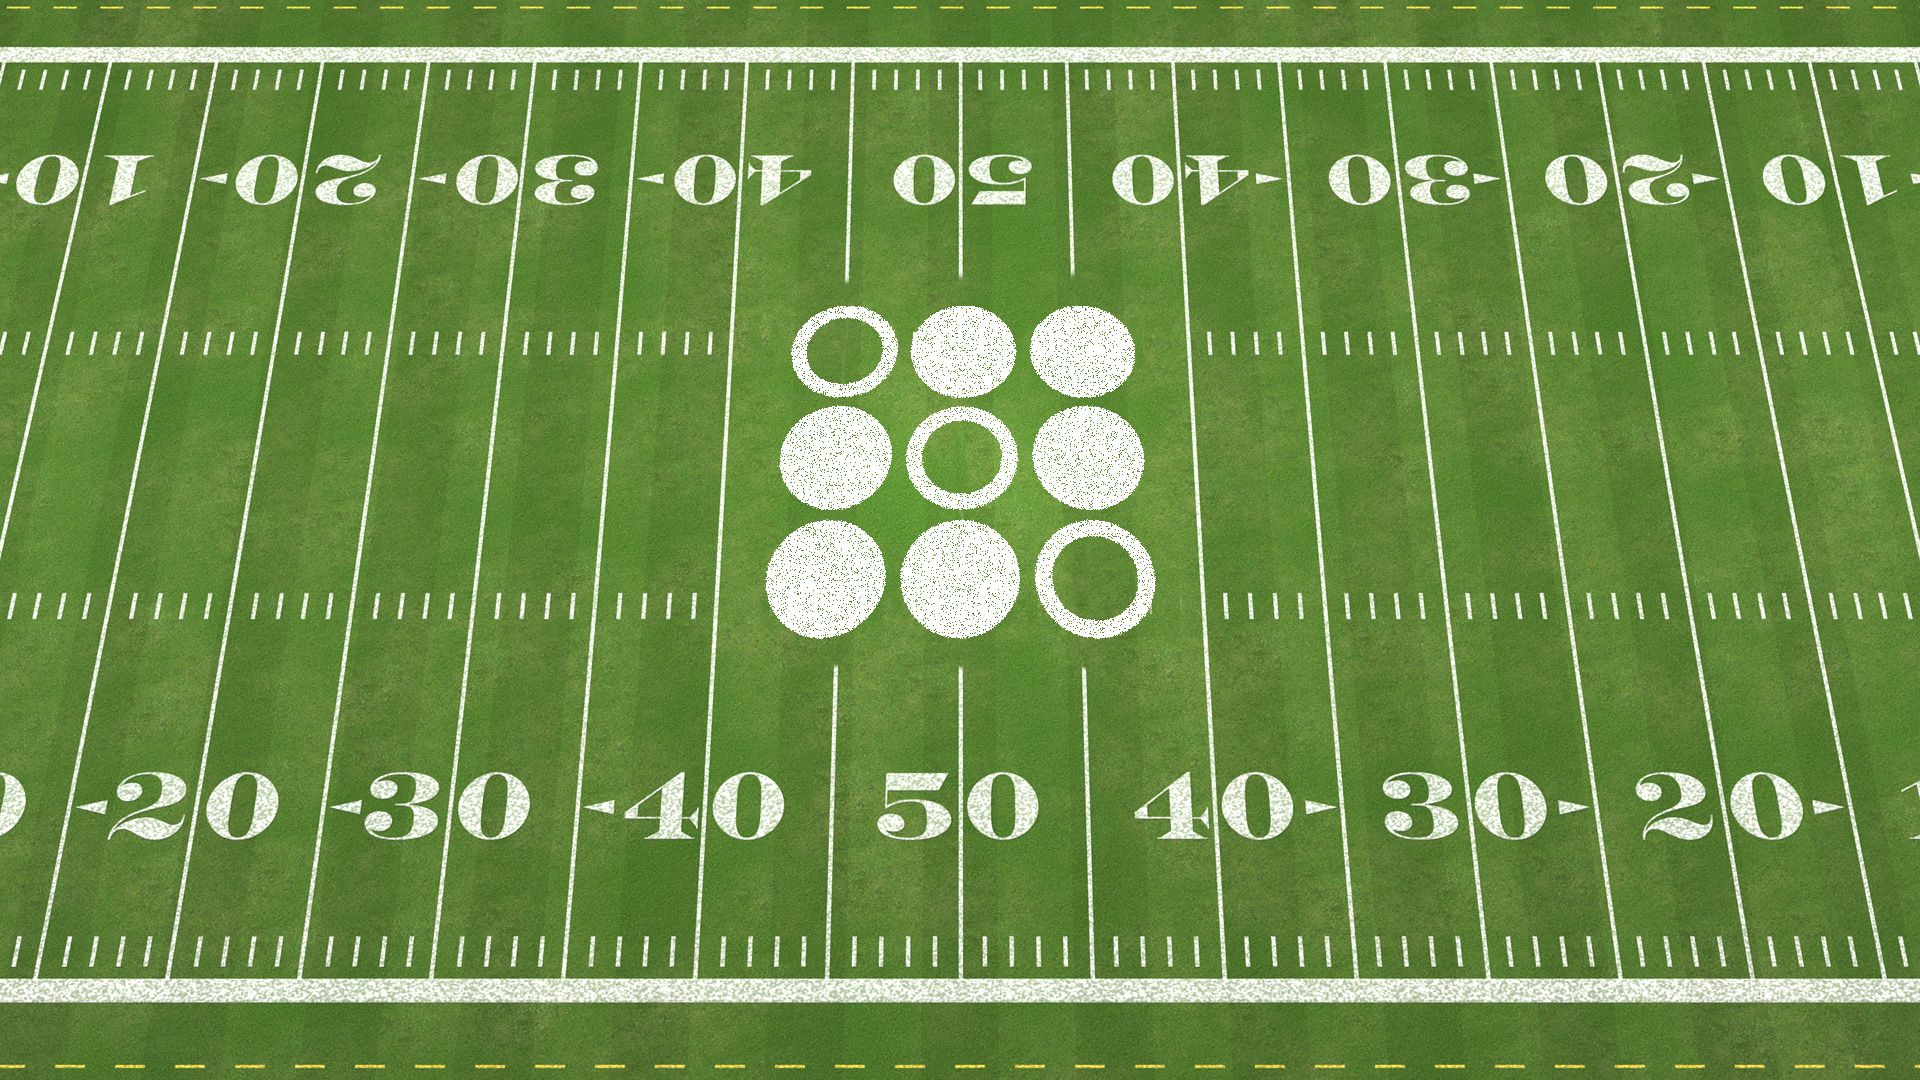 A SoFi logo on a football field.